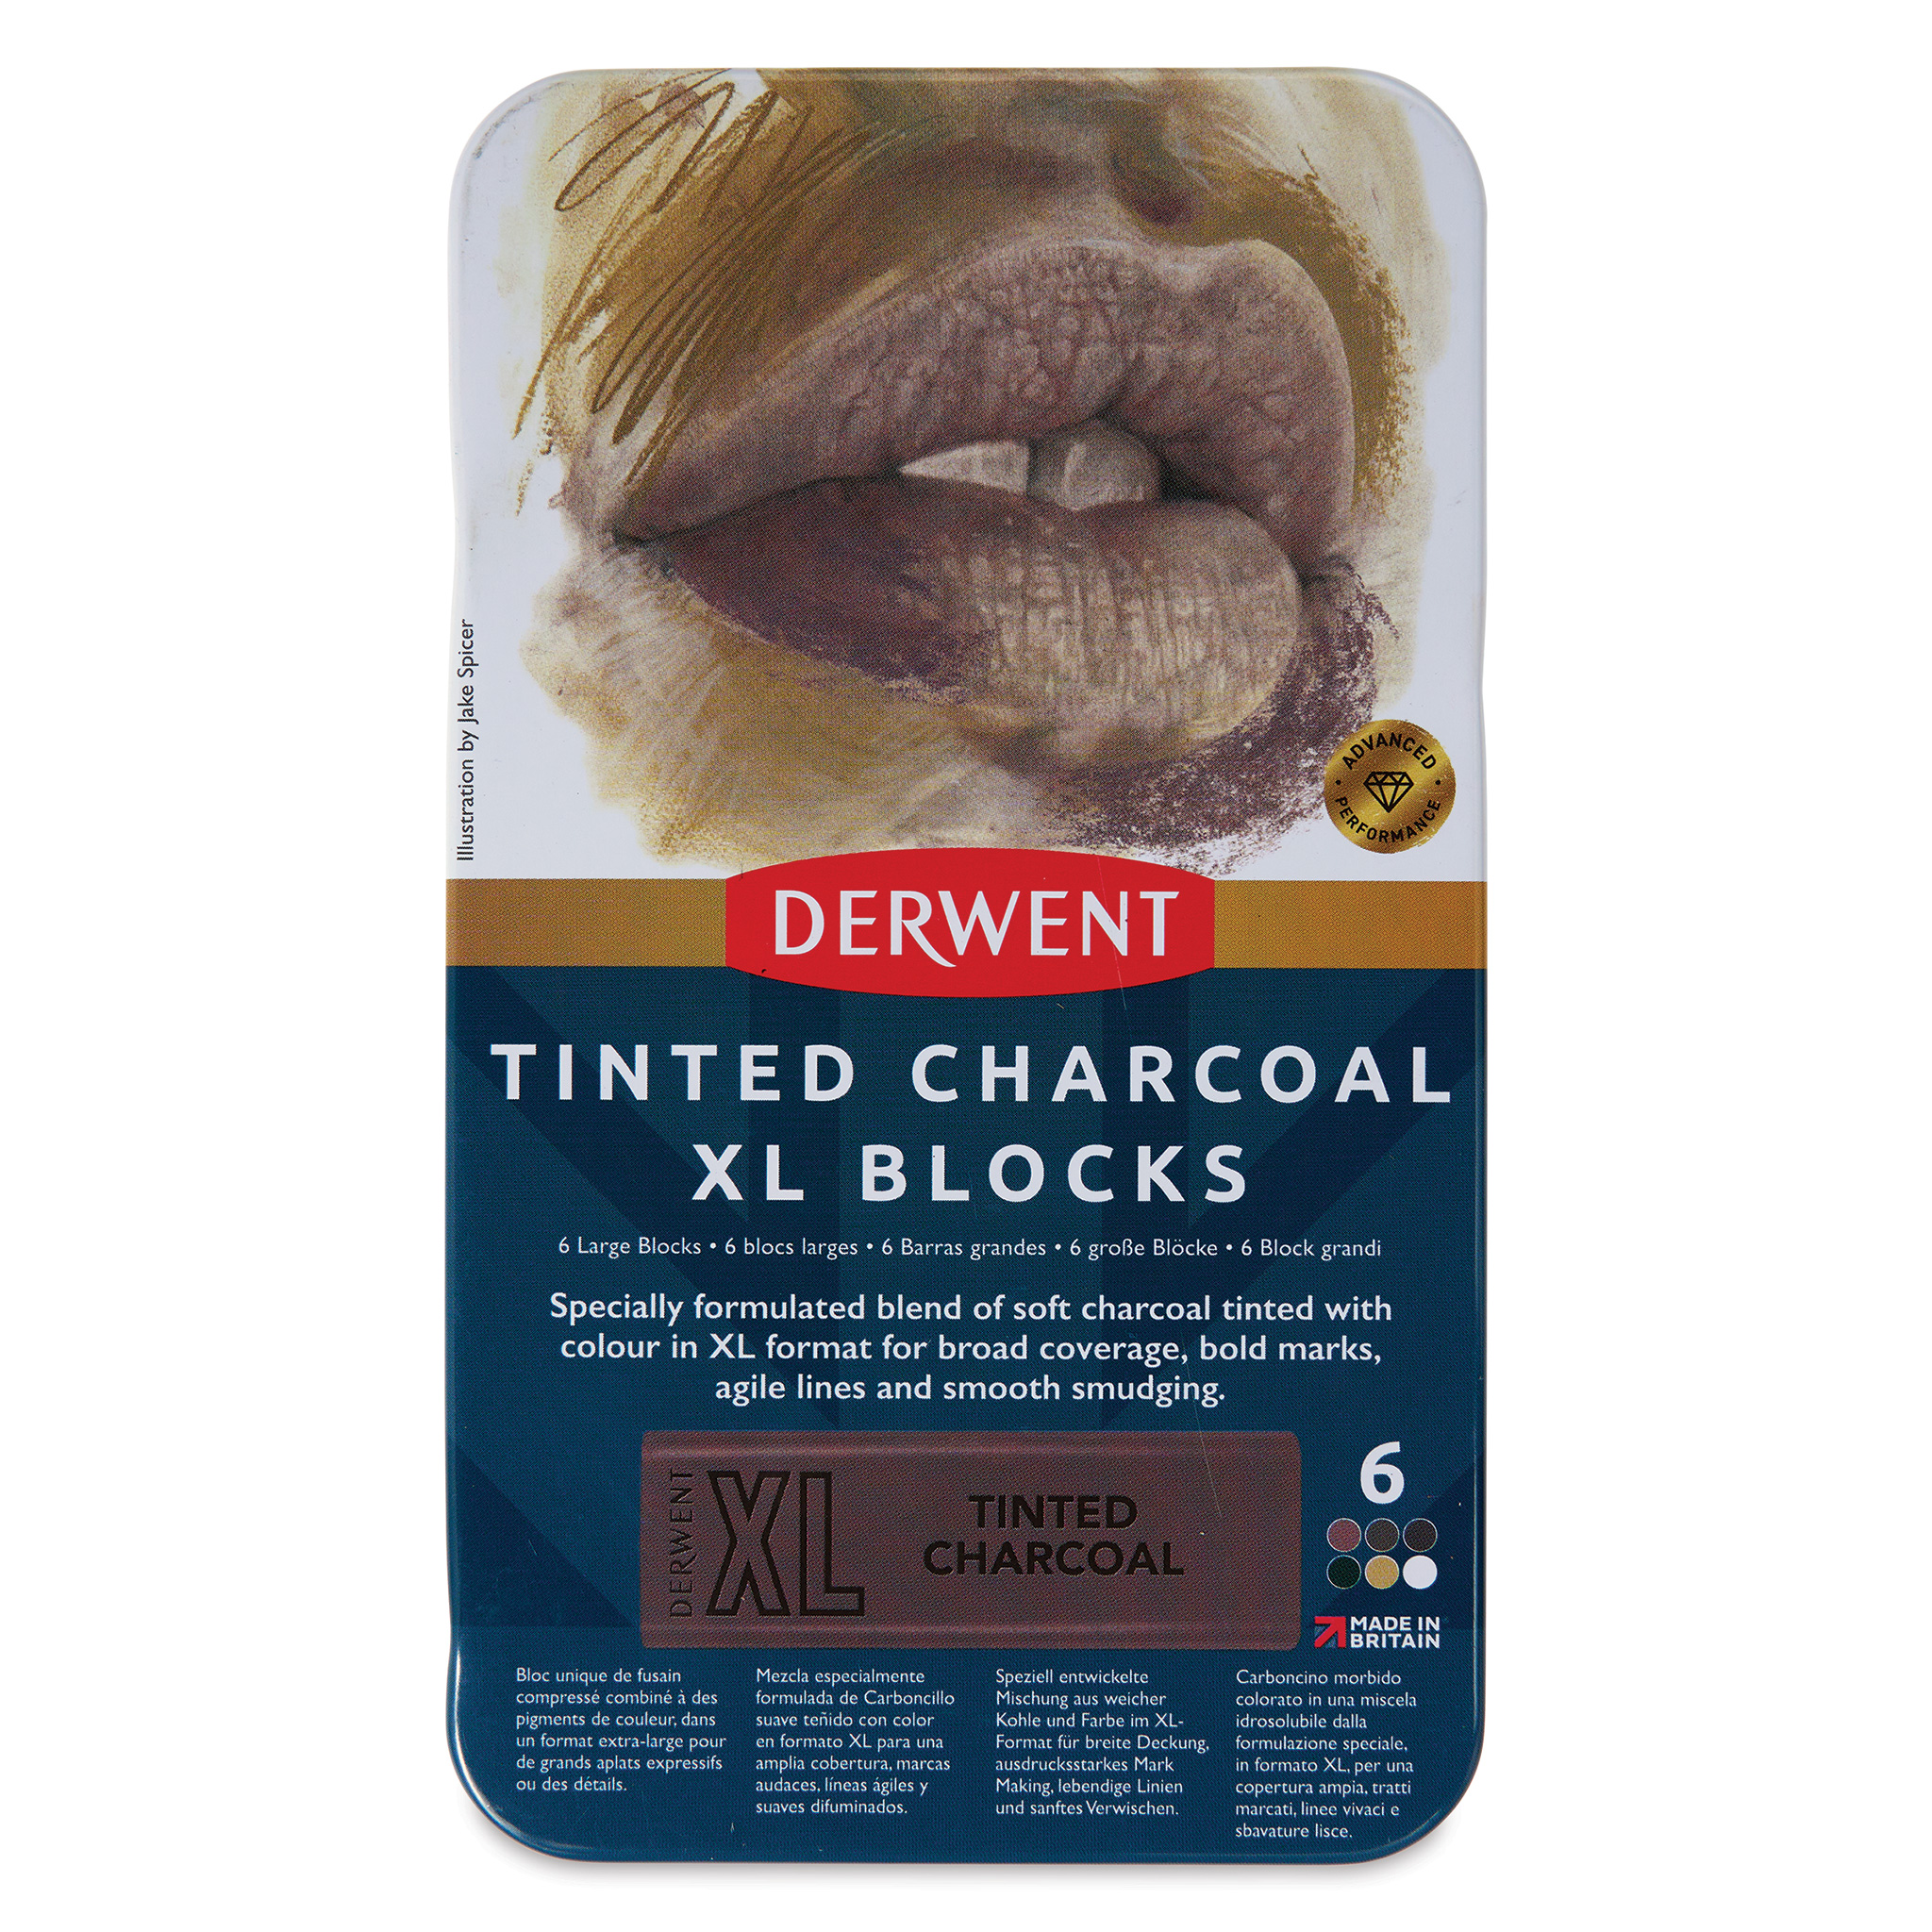 Derwent Tinted Charcoal XL Blocks